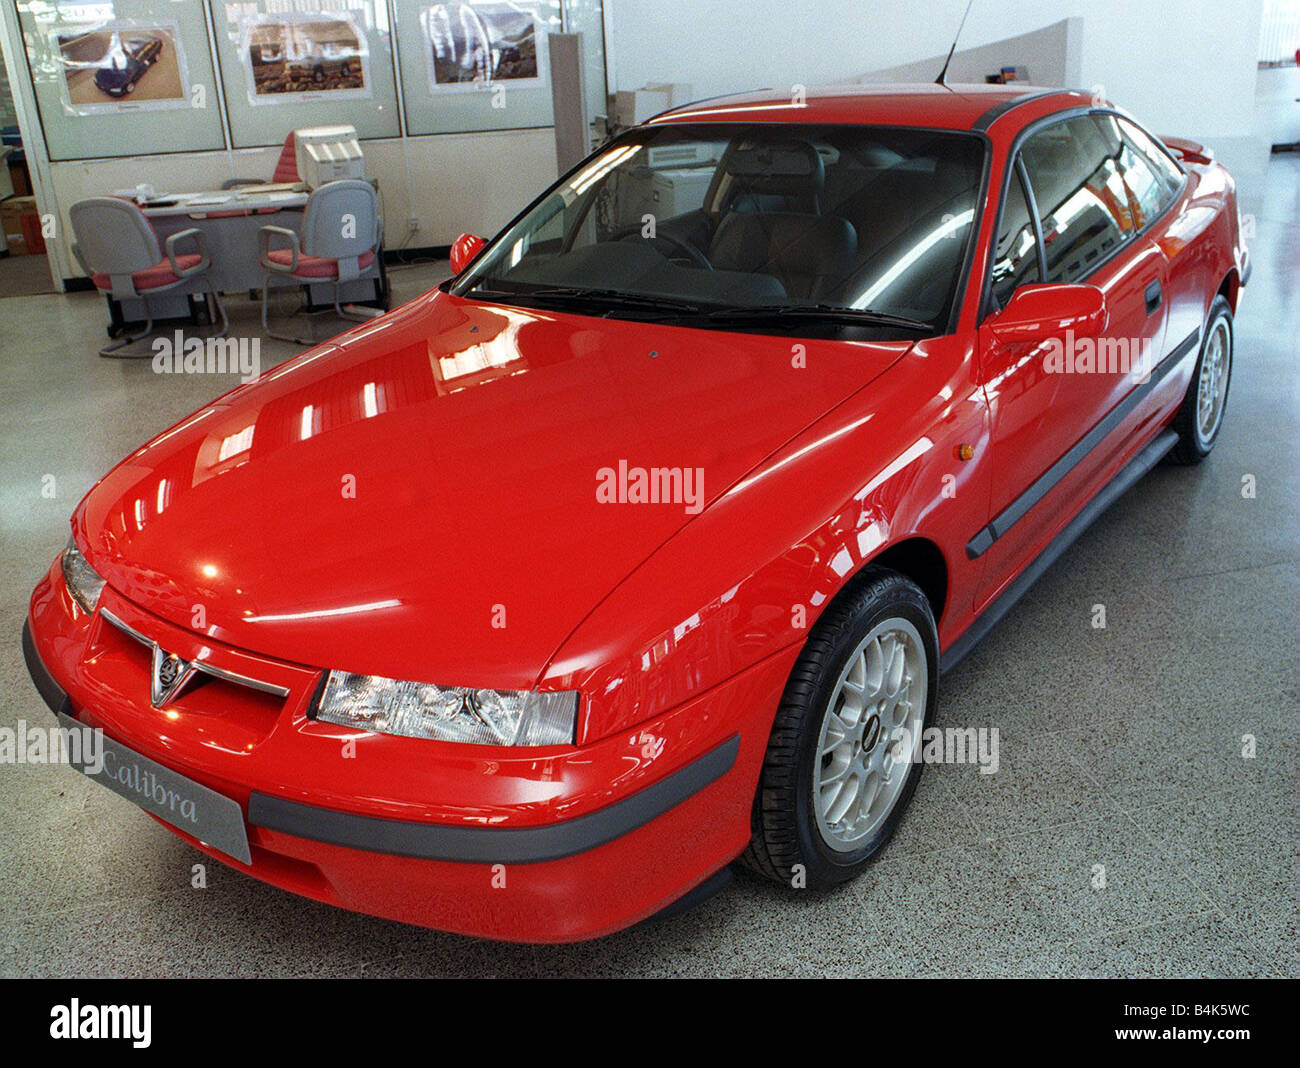 RED VAUXHALL CALIBRA CAR SEPTEMBER 1997 IN SHOWROOM Stock Photo